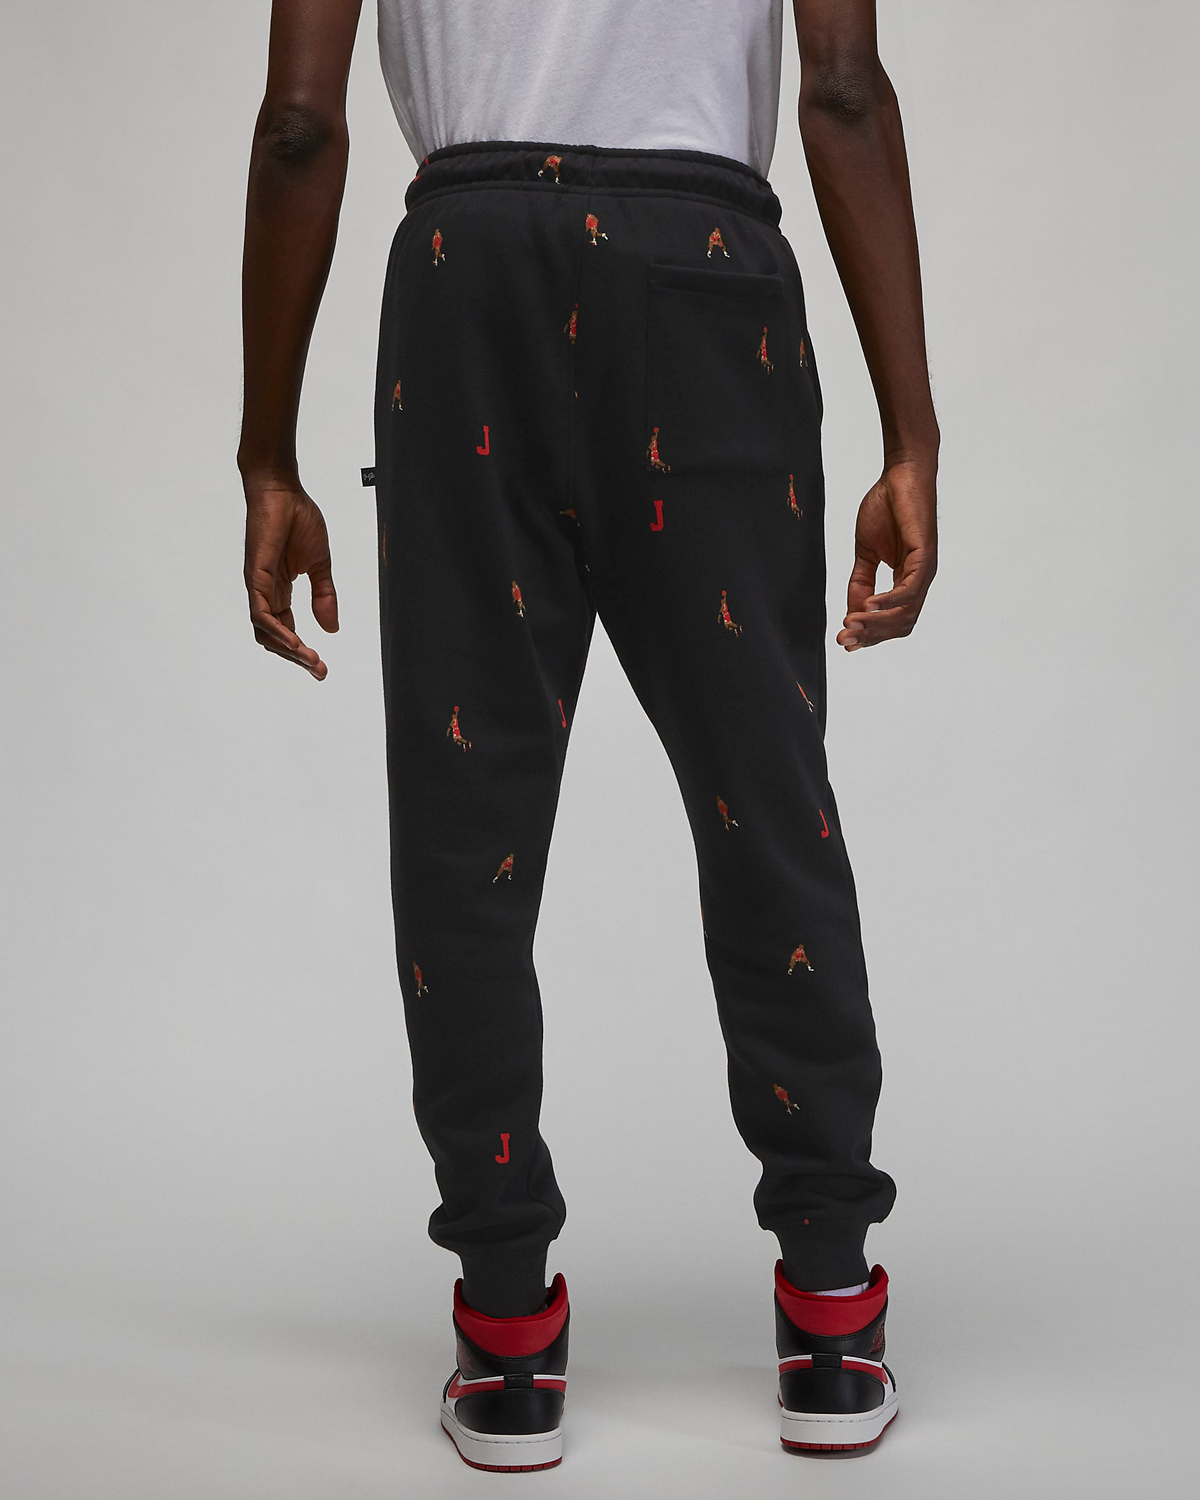 Jordan-Holiday-Allover-Print-Pants-Black-2